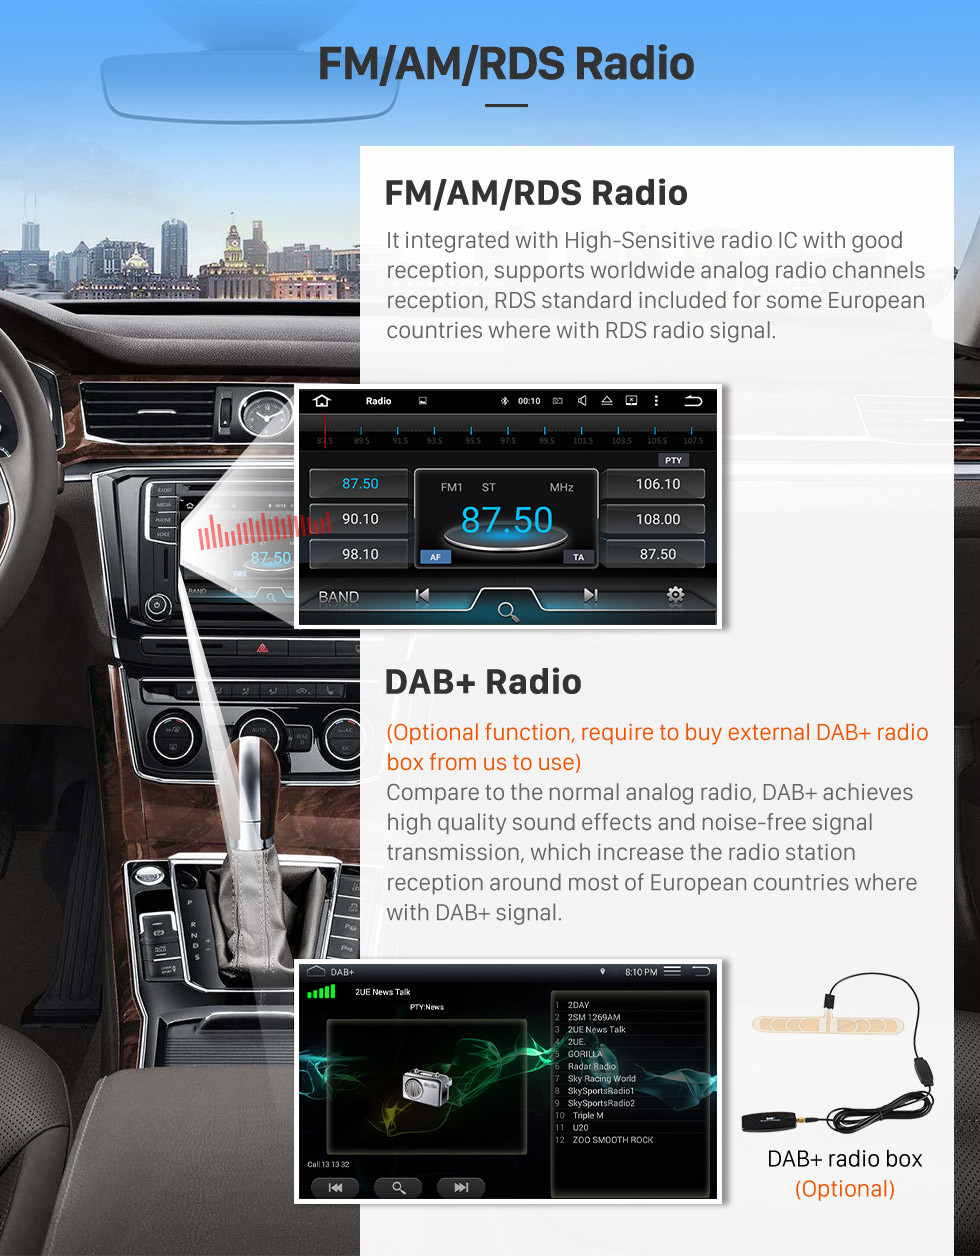 Seicane 2005 2006 2007 Chevrolet Uplander Android 9.0 Radio GPS Reproductor de DVD con pantalla táctil Bluetooth WiFi TV Cámara de respaldo Control del volante 1080P